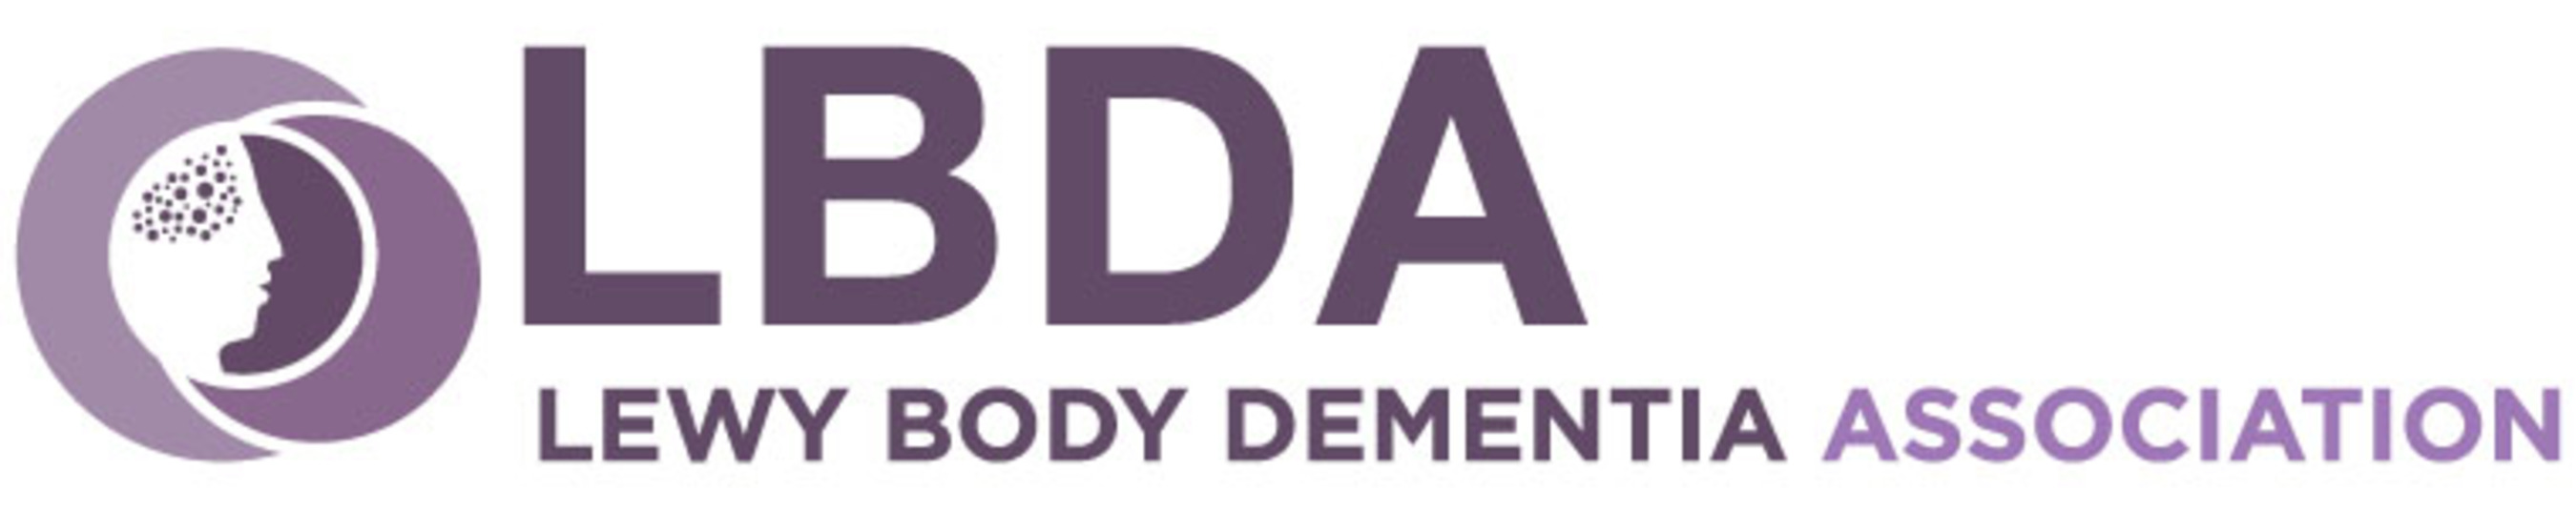 Lewy Body Dementia Association Logo. (PRNewsFoto/Lewy Body Dementia Association) (PRNewsFoto/LEWY BODY DEMENTIA ASSOCIATION)